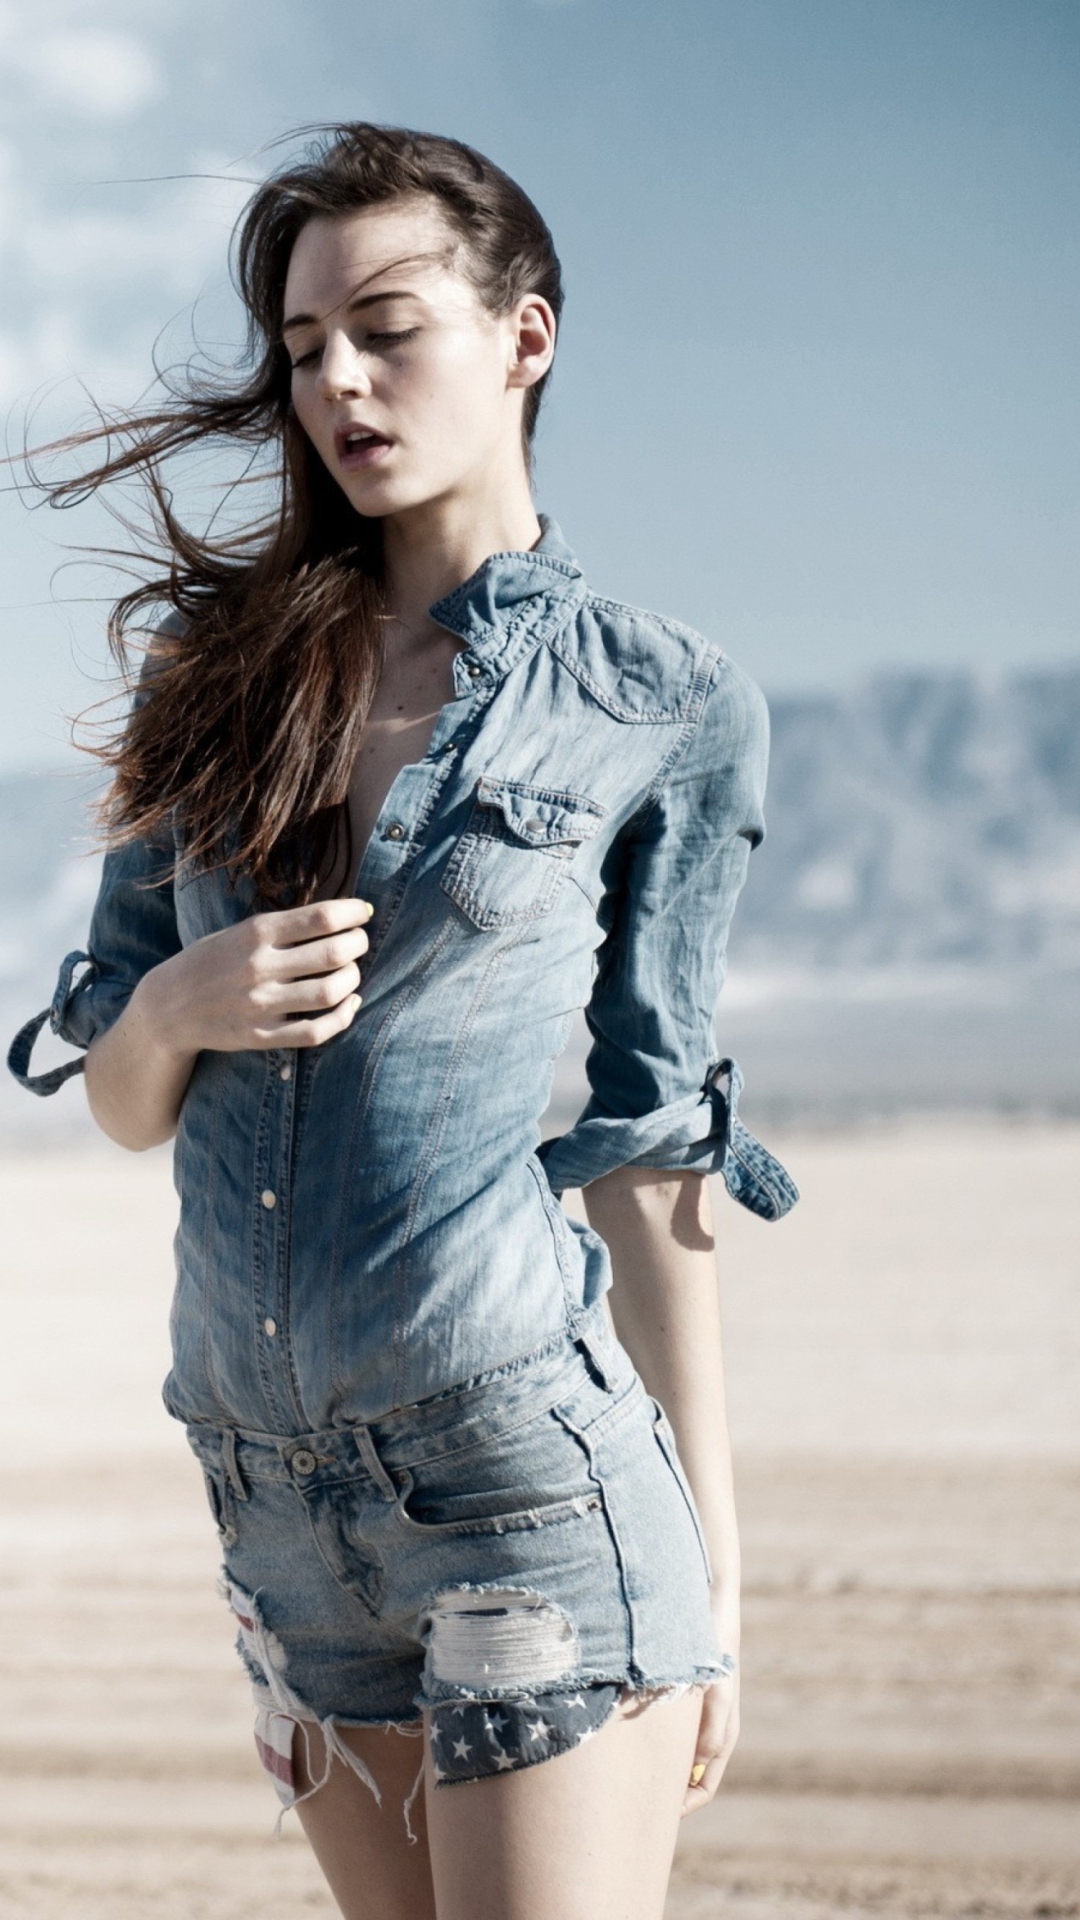 Brunette Model In Jeans Shirt wallpaper 1080x1920